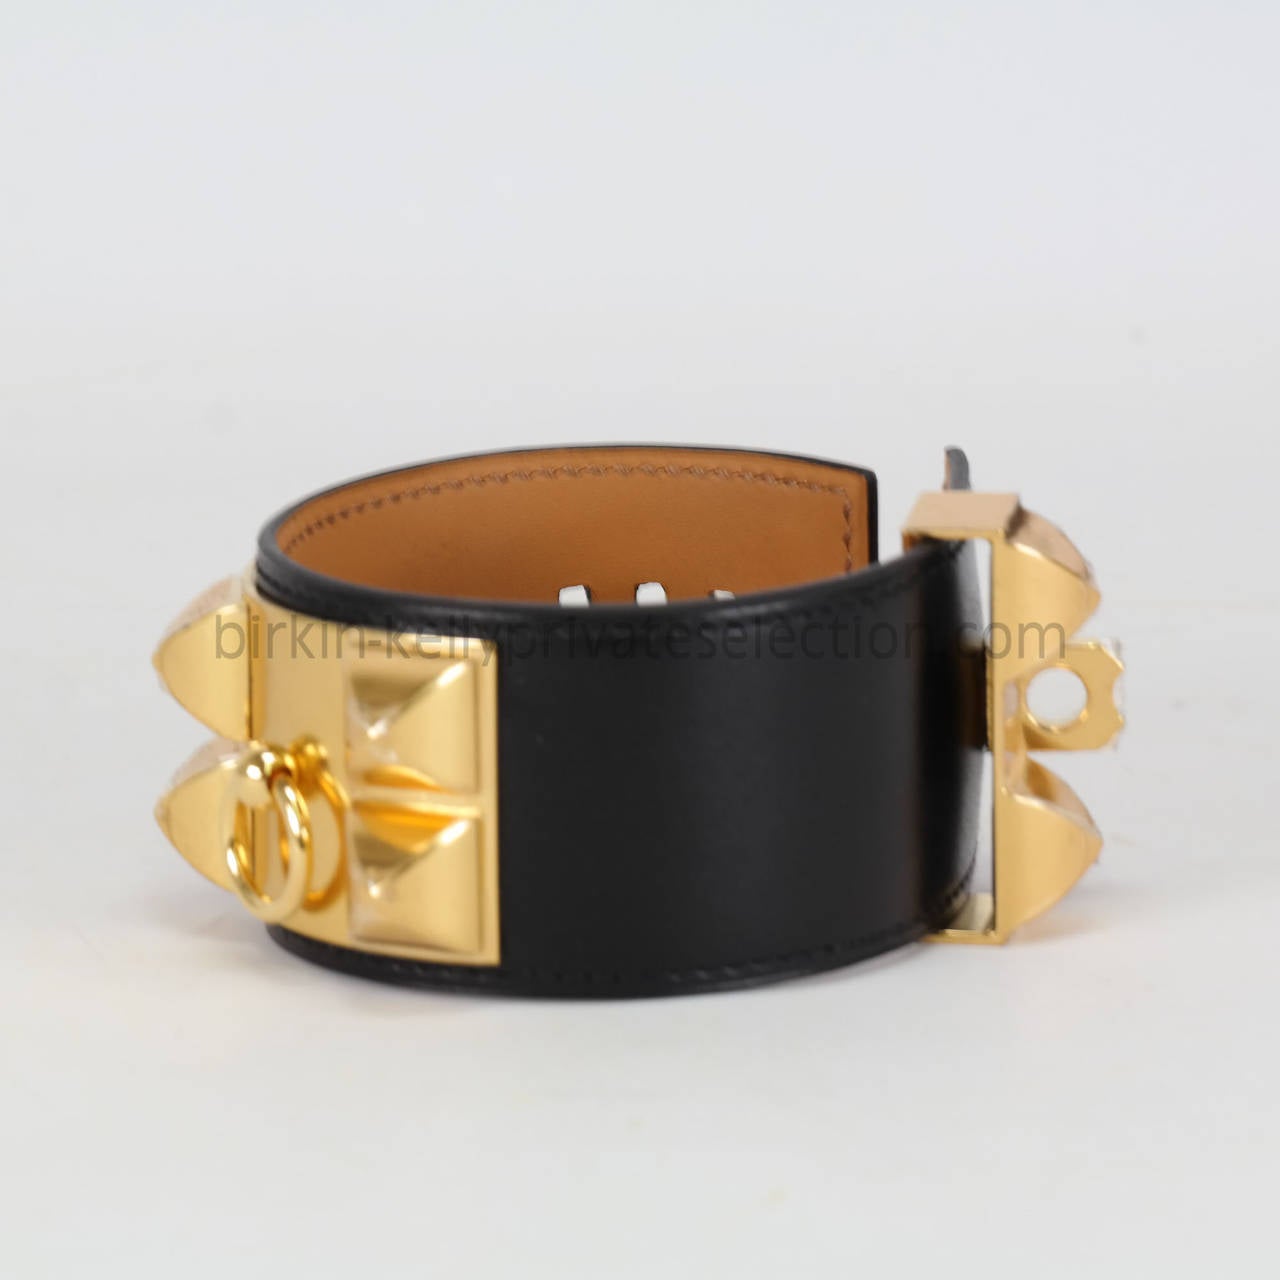 HERMES Bracelet Collier de Chien S BOX BLACK Gold Hardware 2015.

Pre-owned and never used.

Bought it in Hermes store in 2015.

Composition; Leather.

Model; Collier de Chien.

Size; S.

Color; NOIR.

Details:
*Protective felt